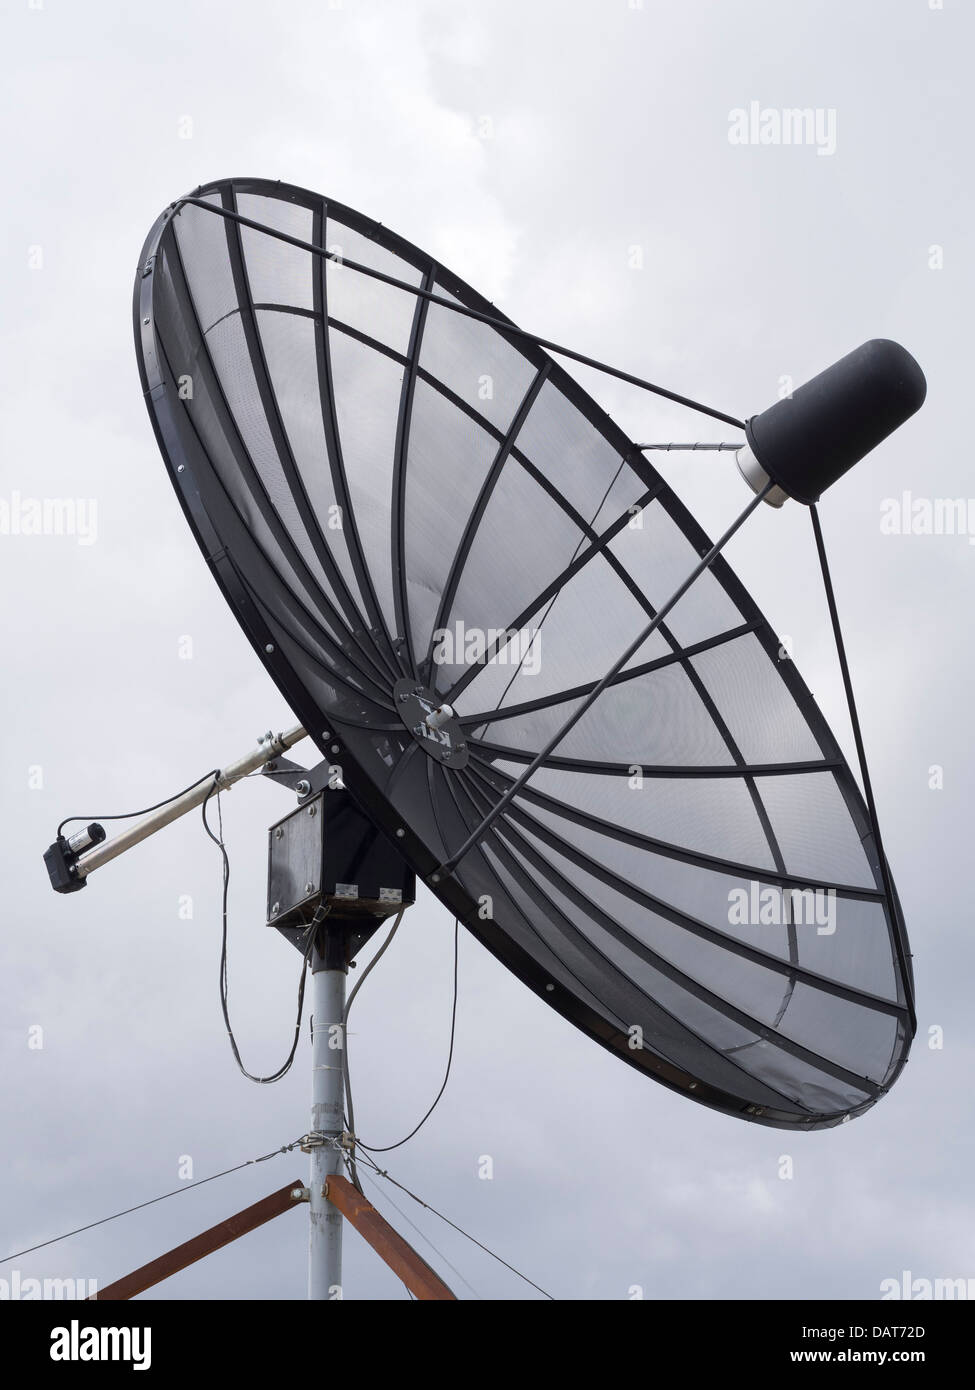 Parabolic satellite dish Stock Photo - Alamy